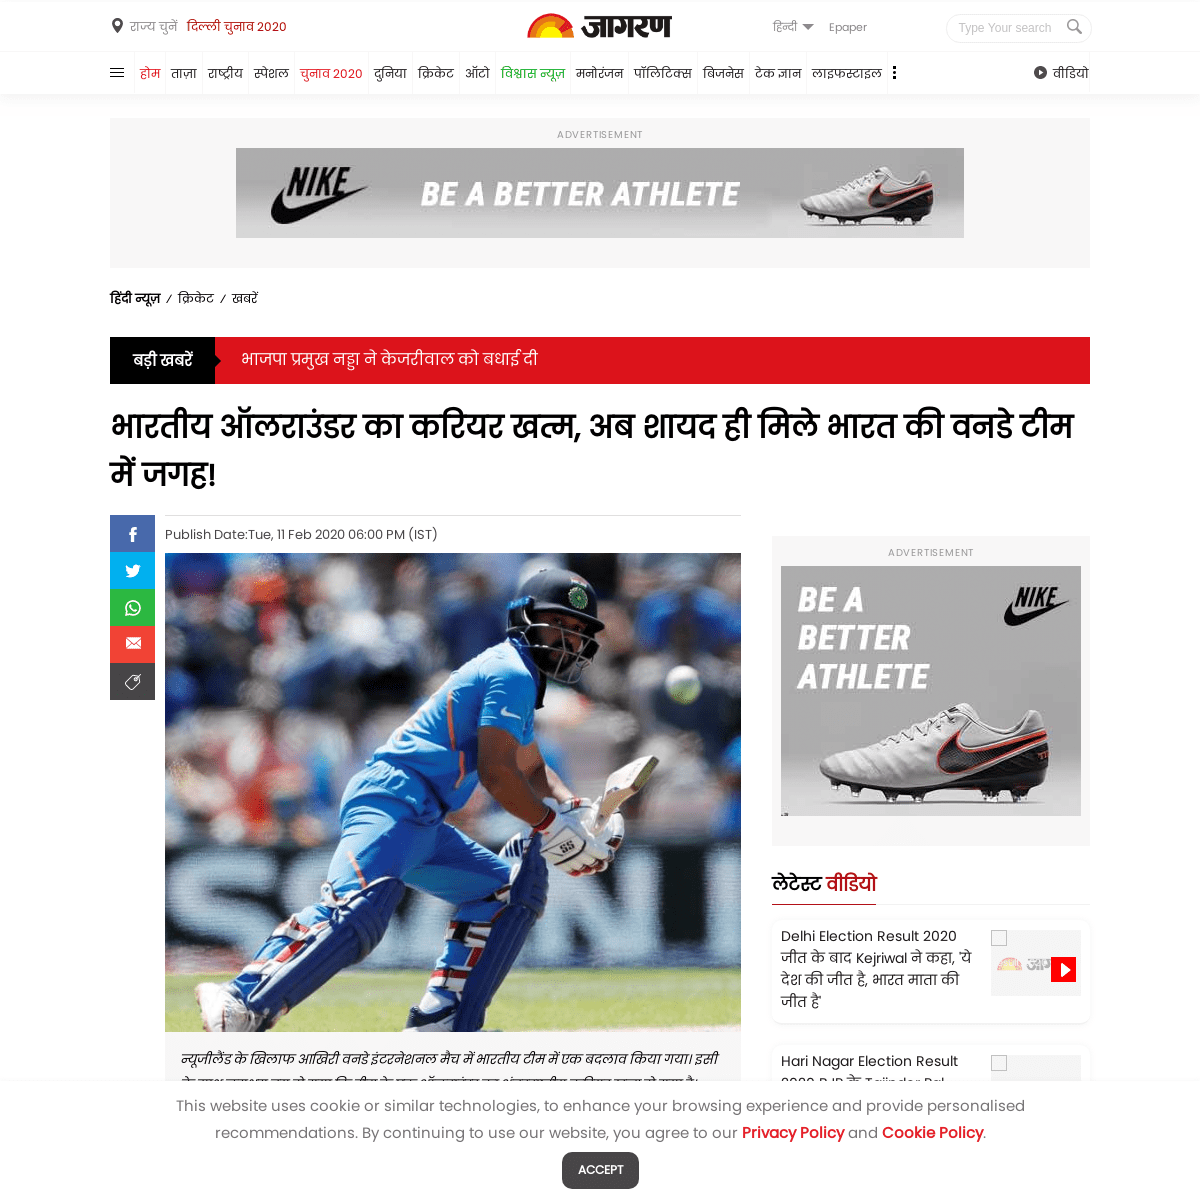 A complete backup of www.jagran.com/cricket/headlines-kedar-jadhav-odi-career-ends-for-team-india-because-he-is-35-years-old-now